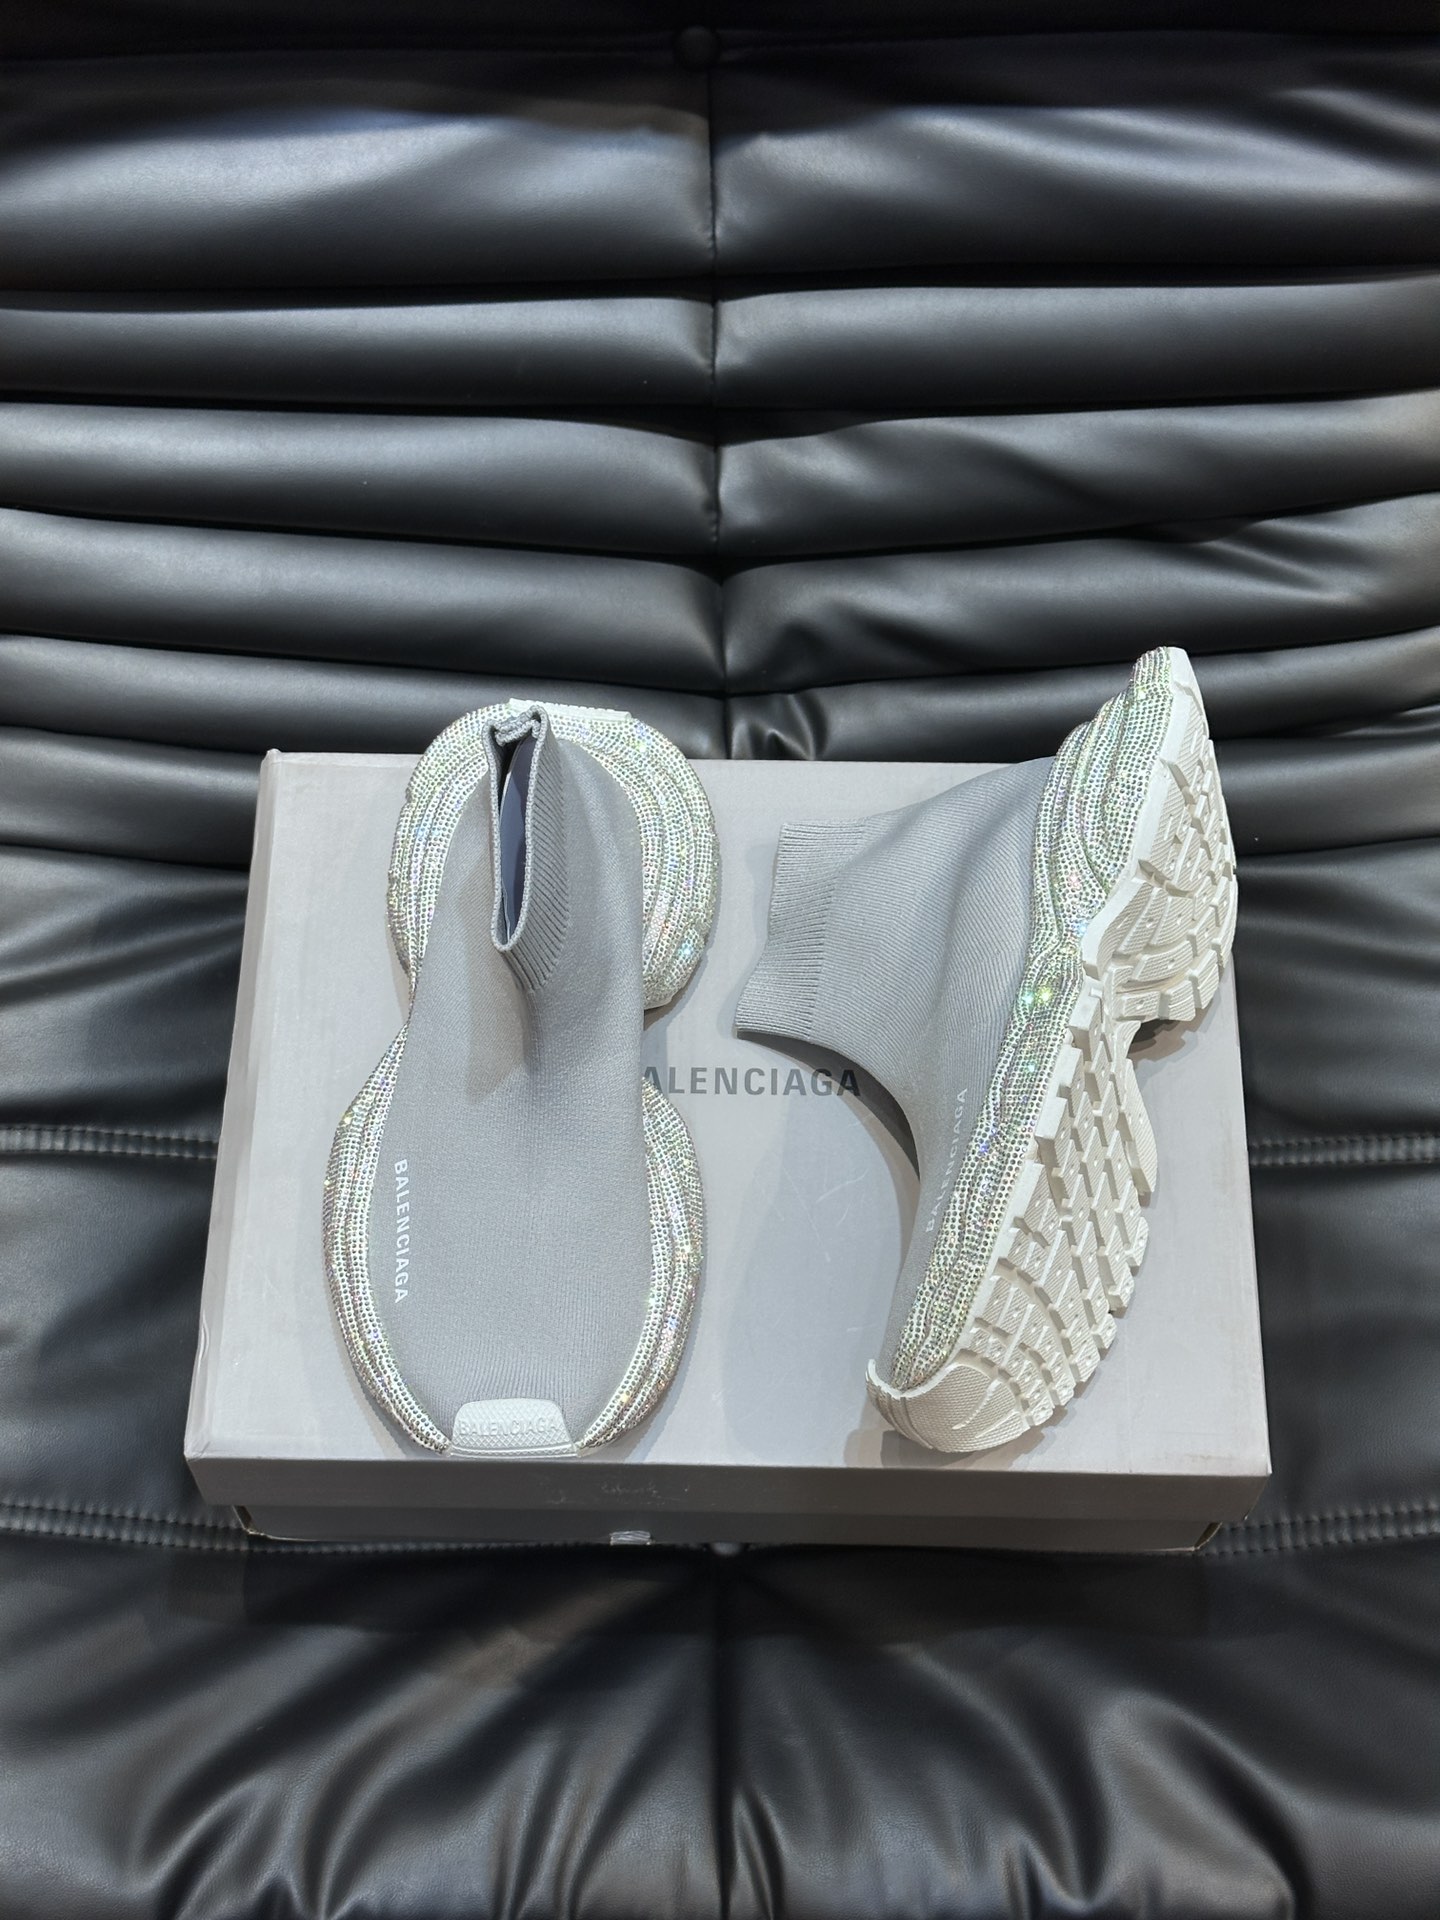 Balenciaga巴黎世家手工烫钻3xl袜子鞋系列潮酷情侣款复古休闲运动鞋系列推出探索时尚界对于原创与